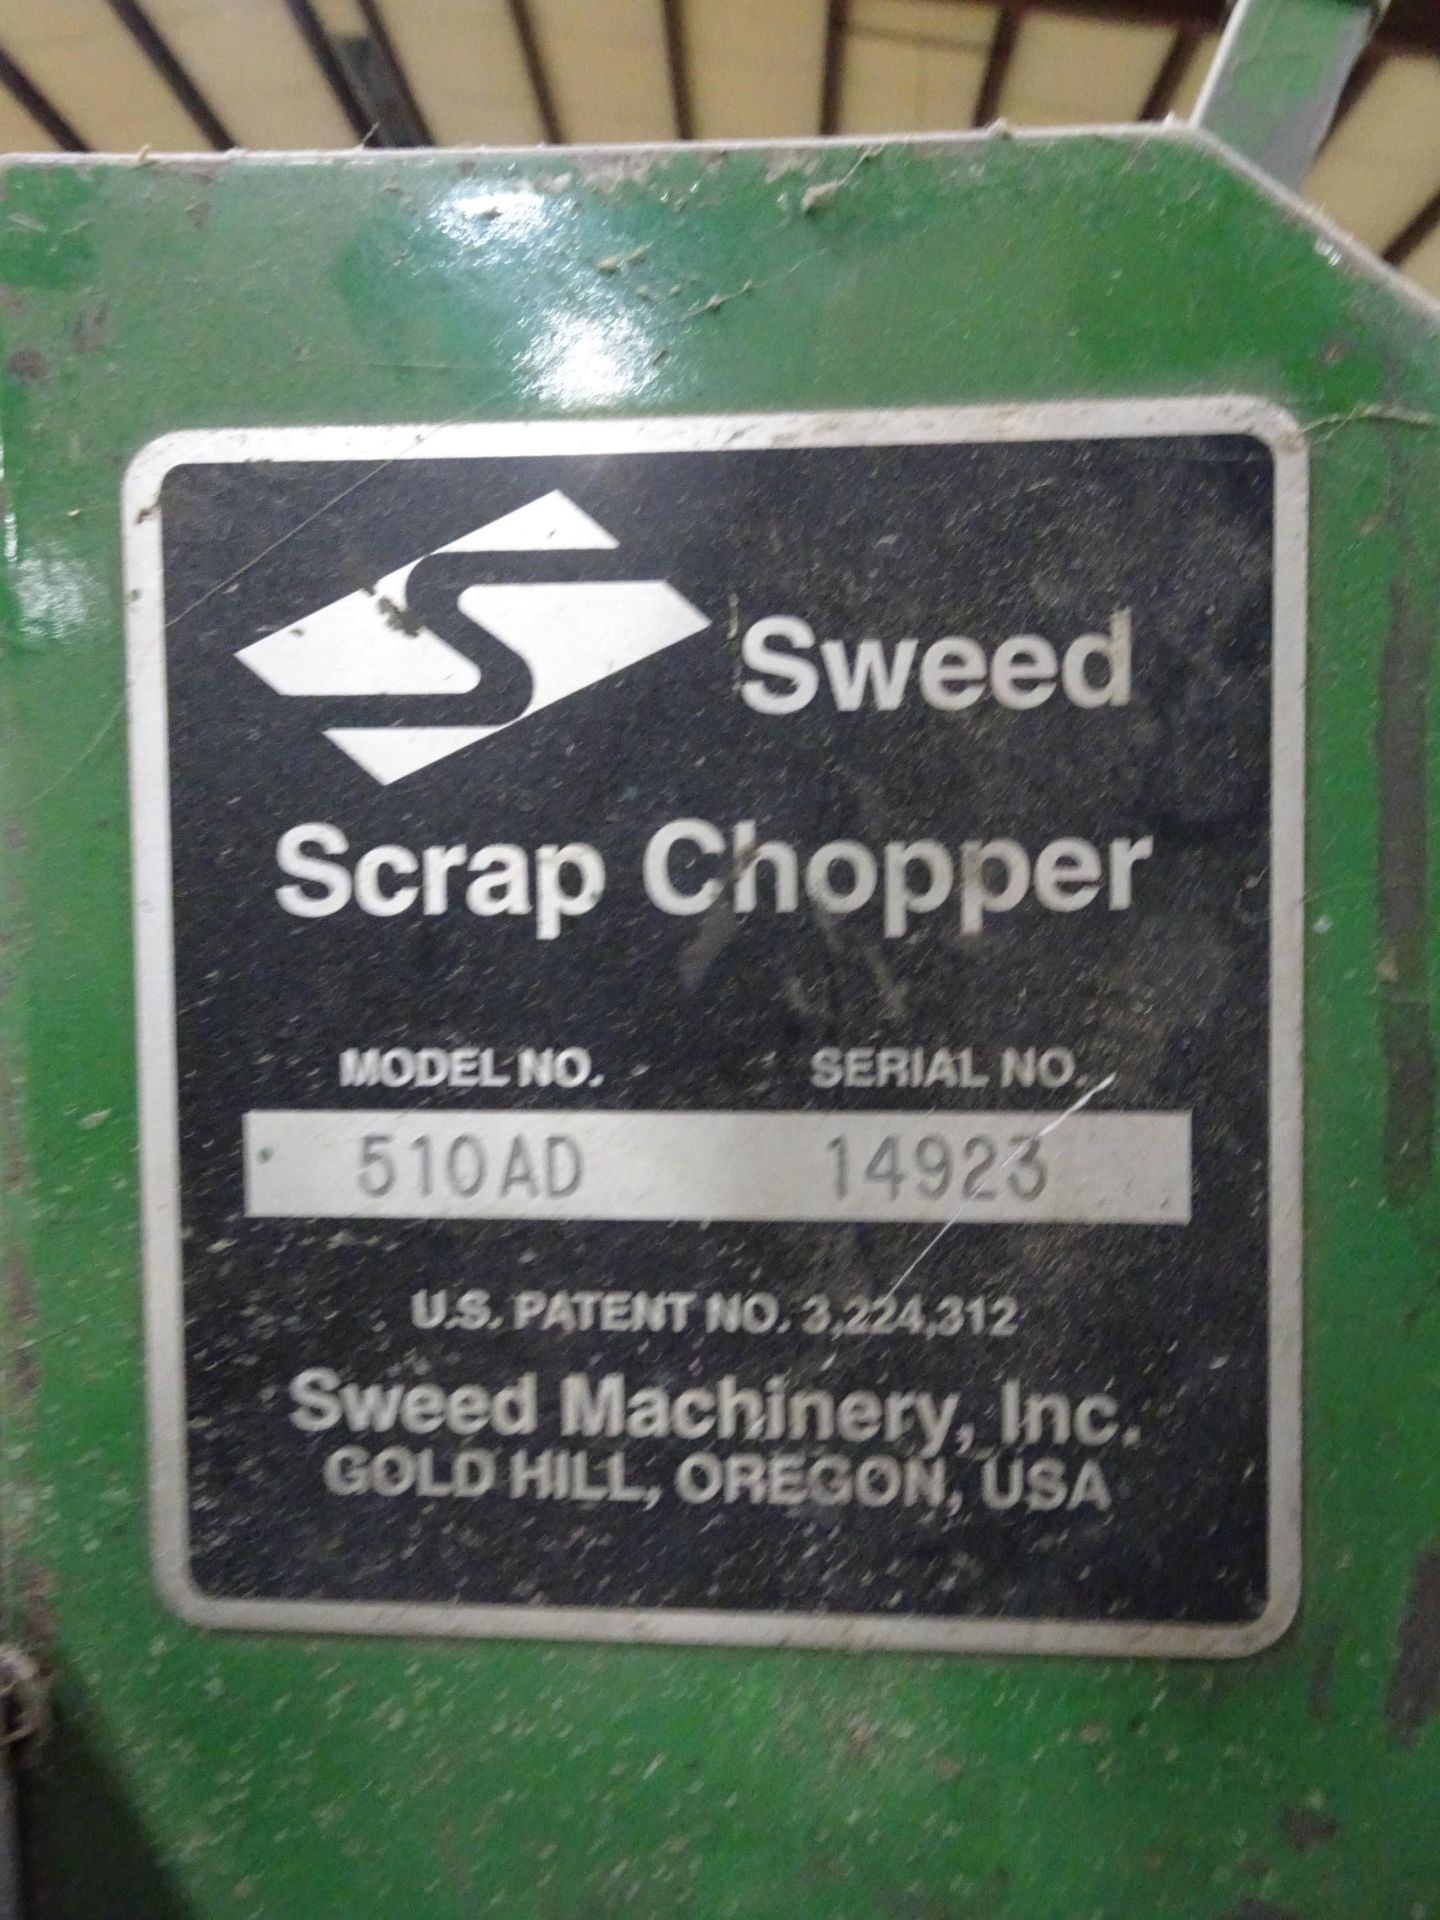 Sweed Model 510AD Scrap Chopper - Image 2 of 3